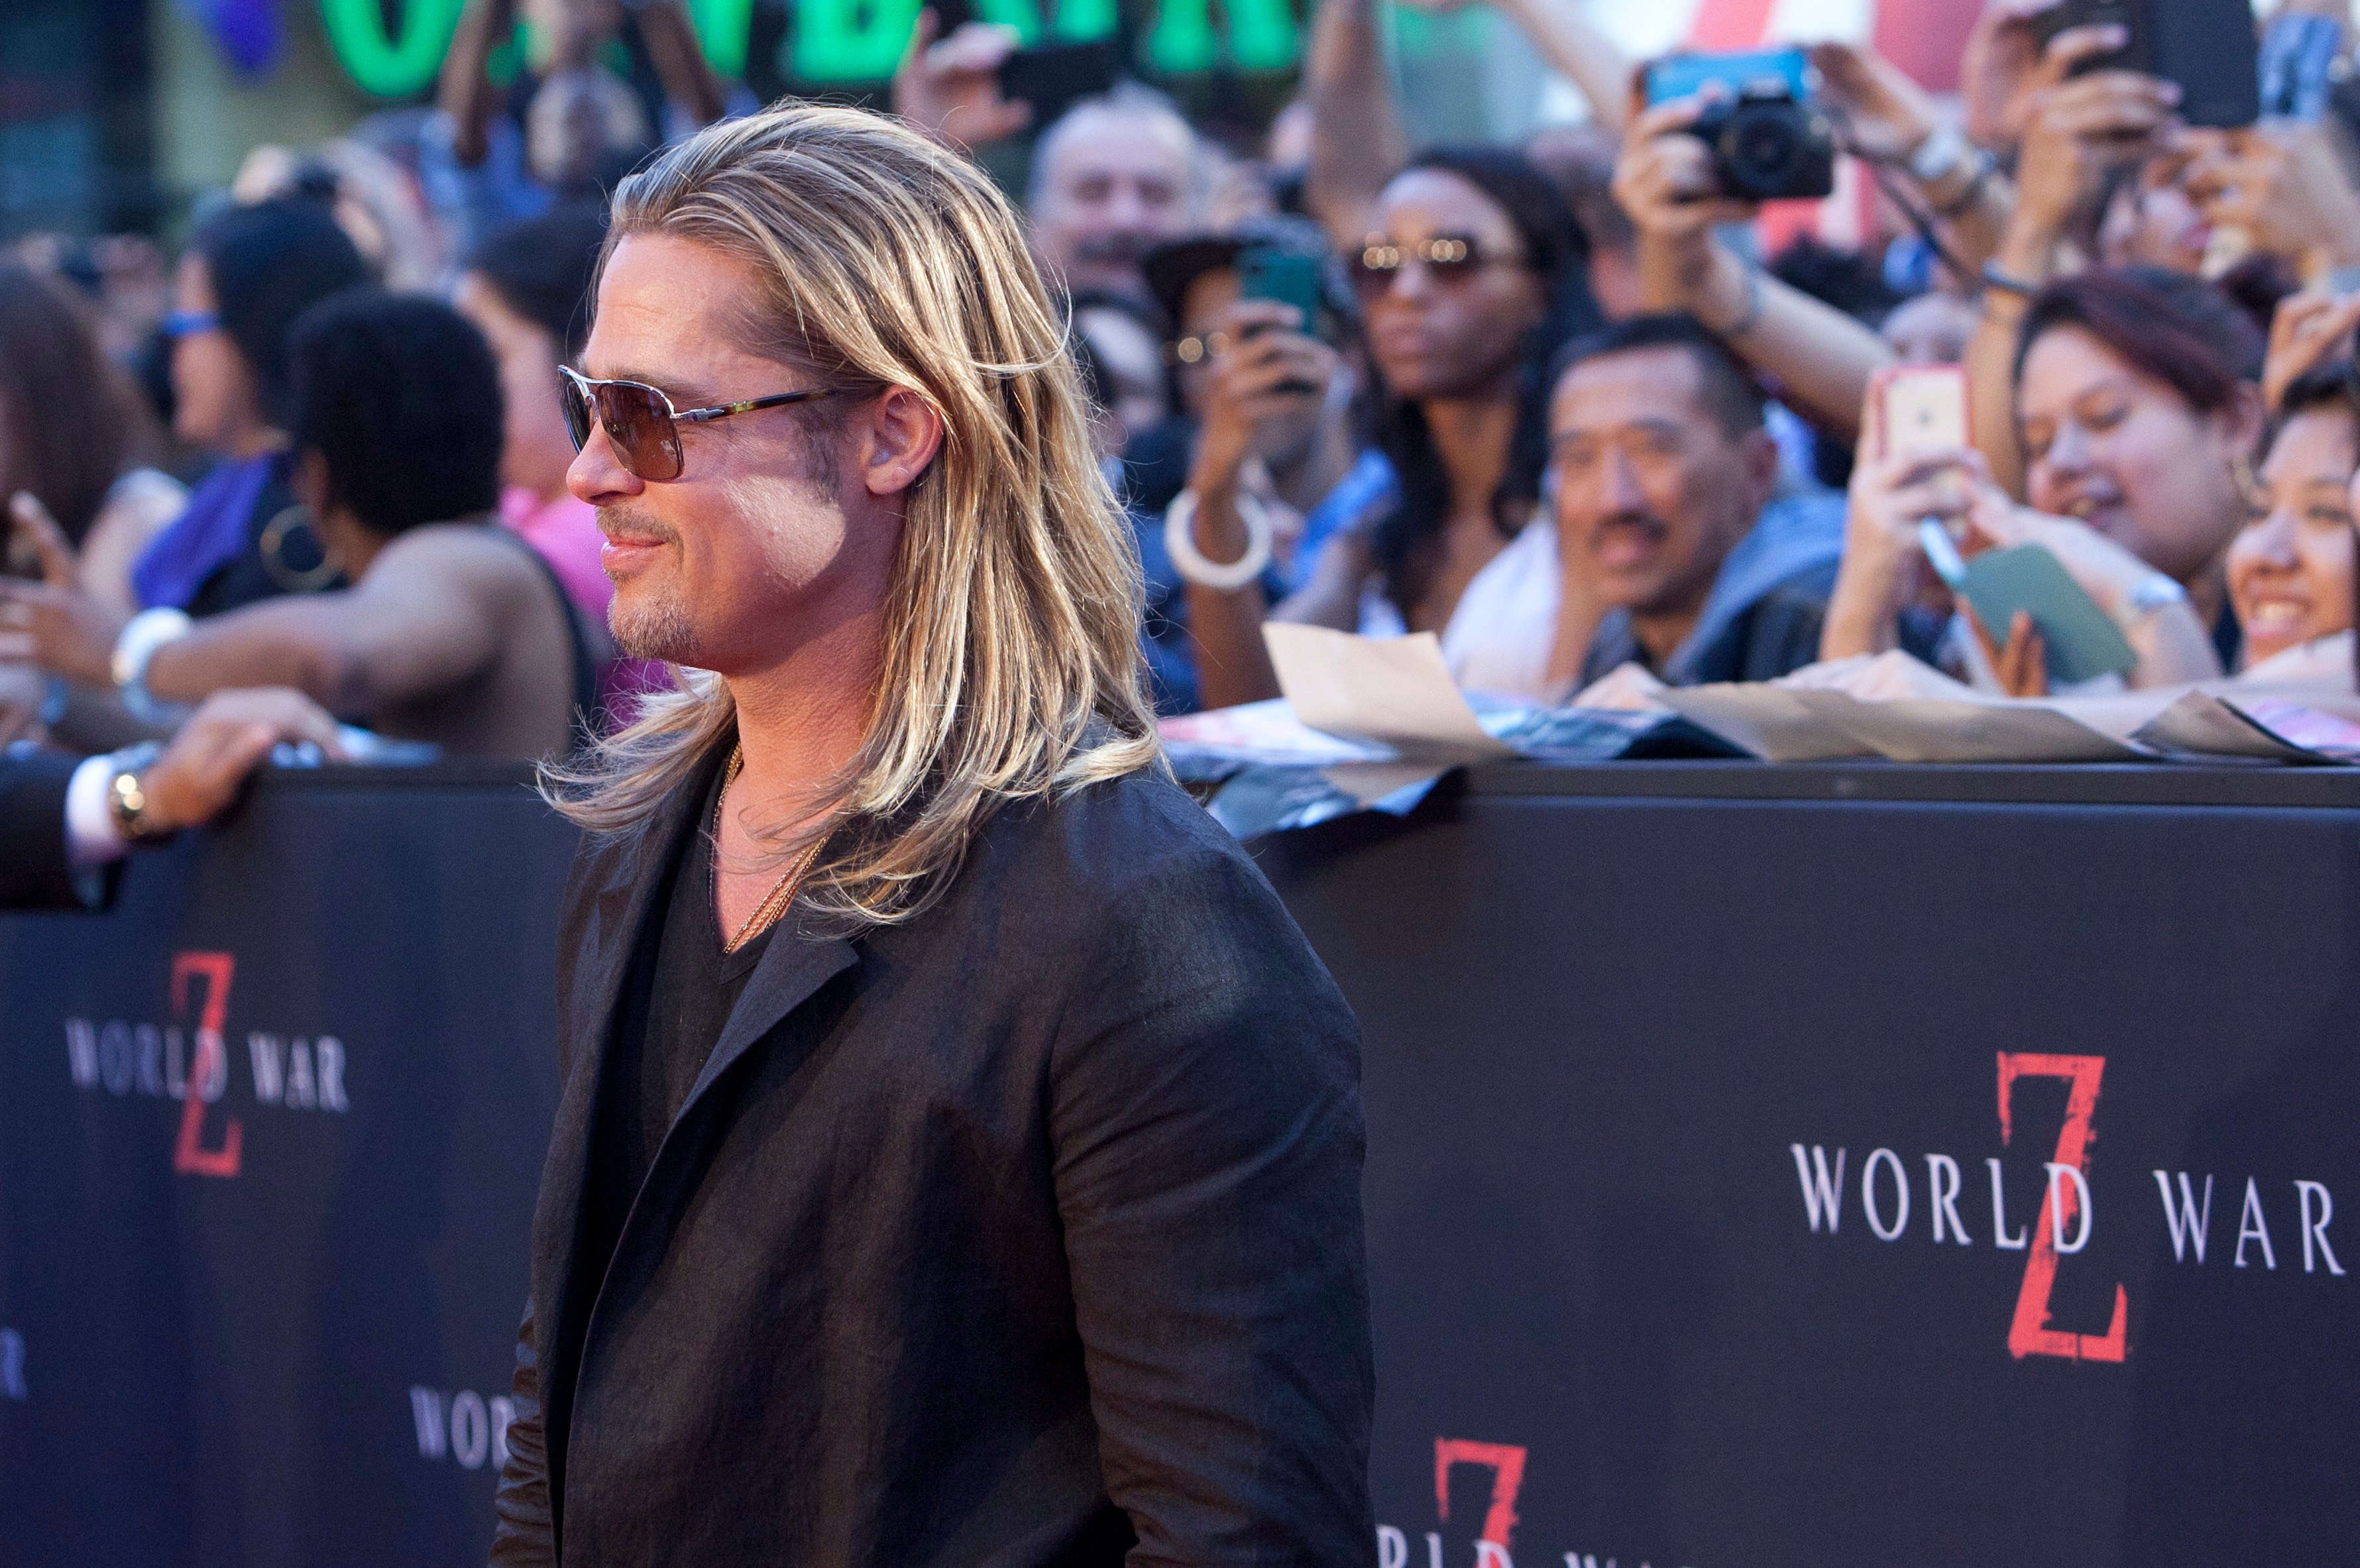 Brad Pitt attends the "World War Z" premiere in New York City. 